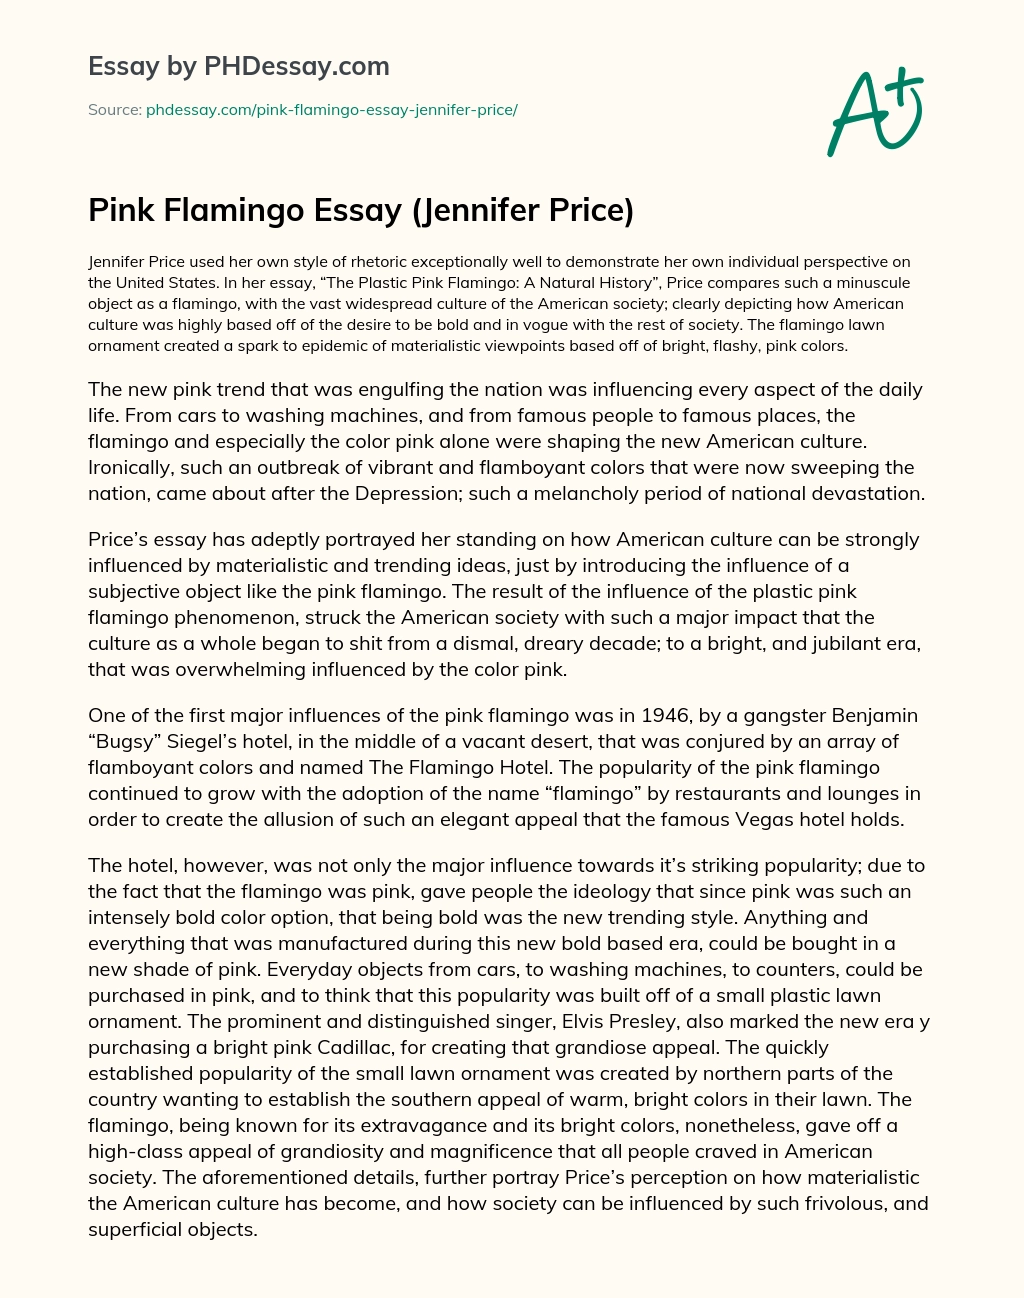 Pink Flamingo Essay (Jennifer Price) essay